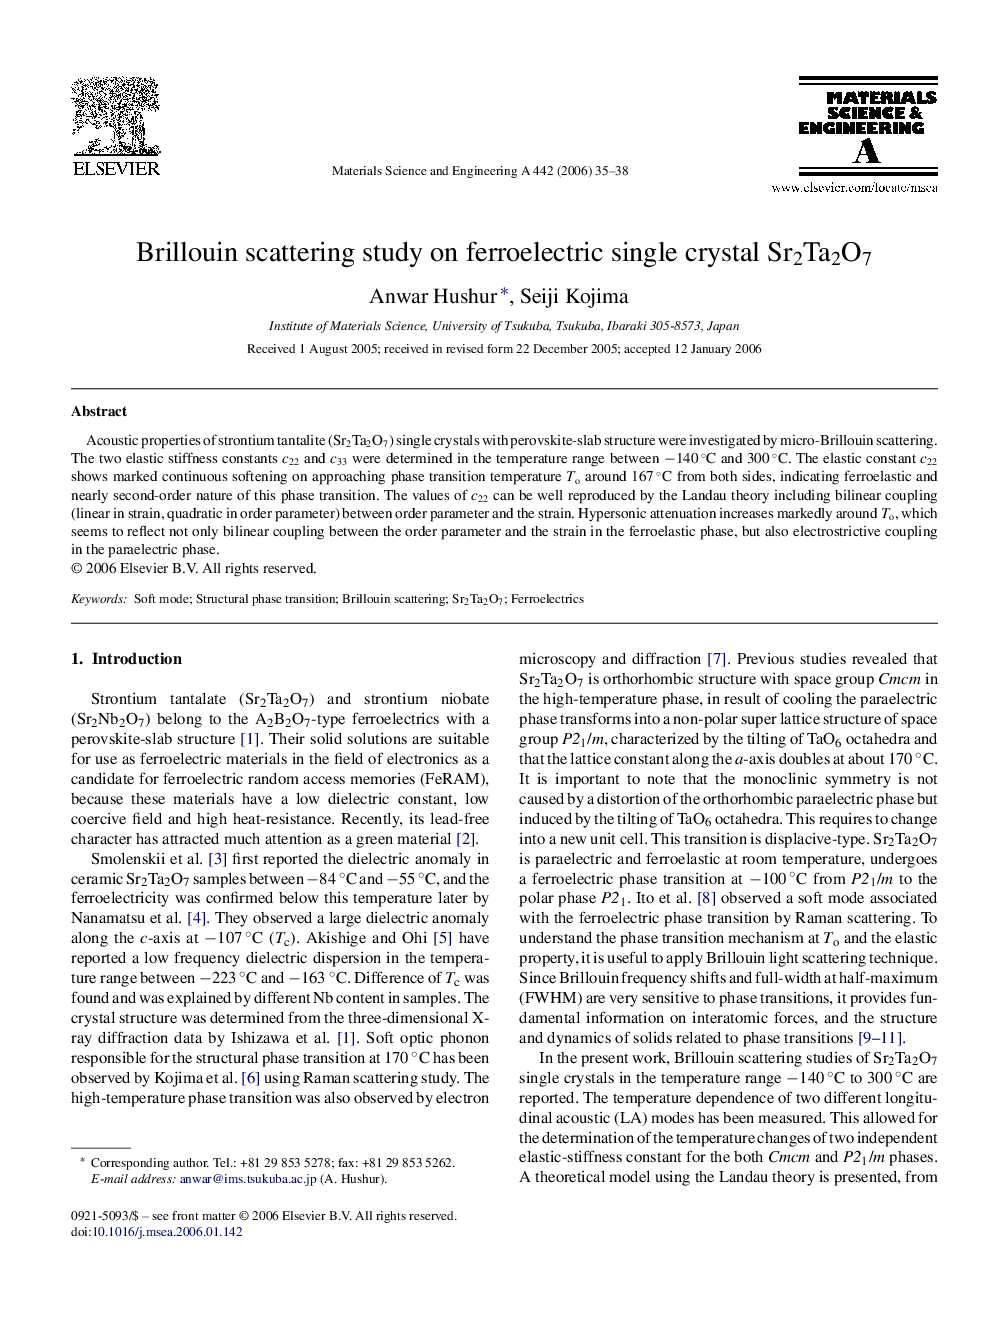 Brillouin scattering study on ferroelectric single crystal Sr2Ta2O7